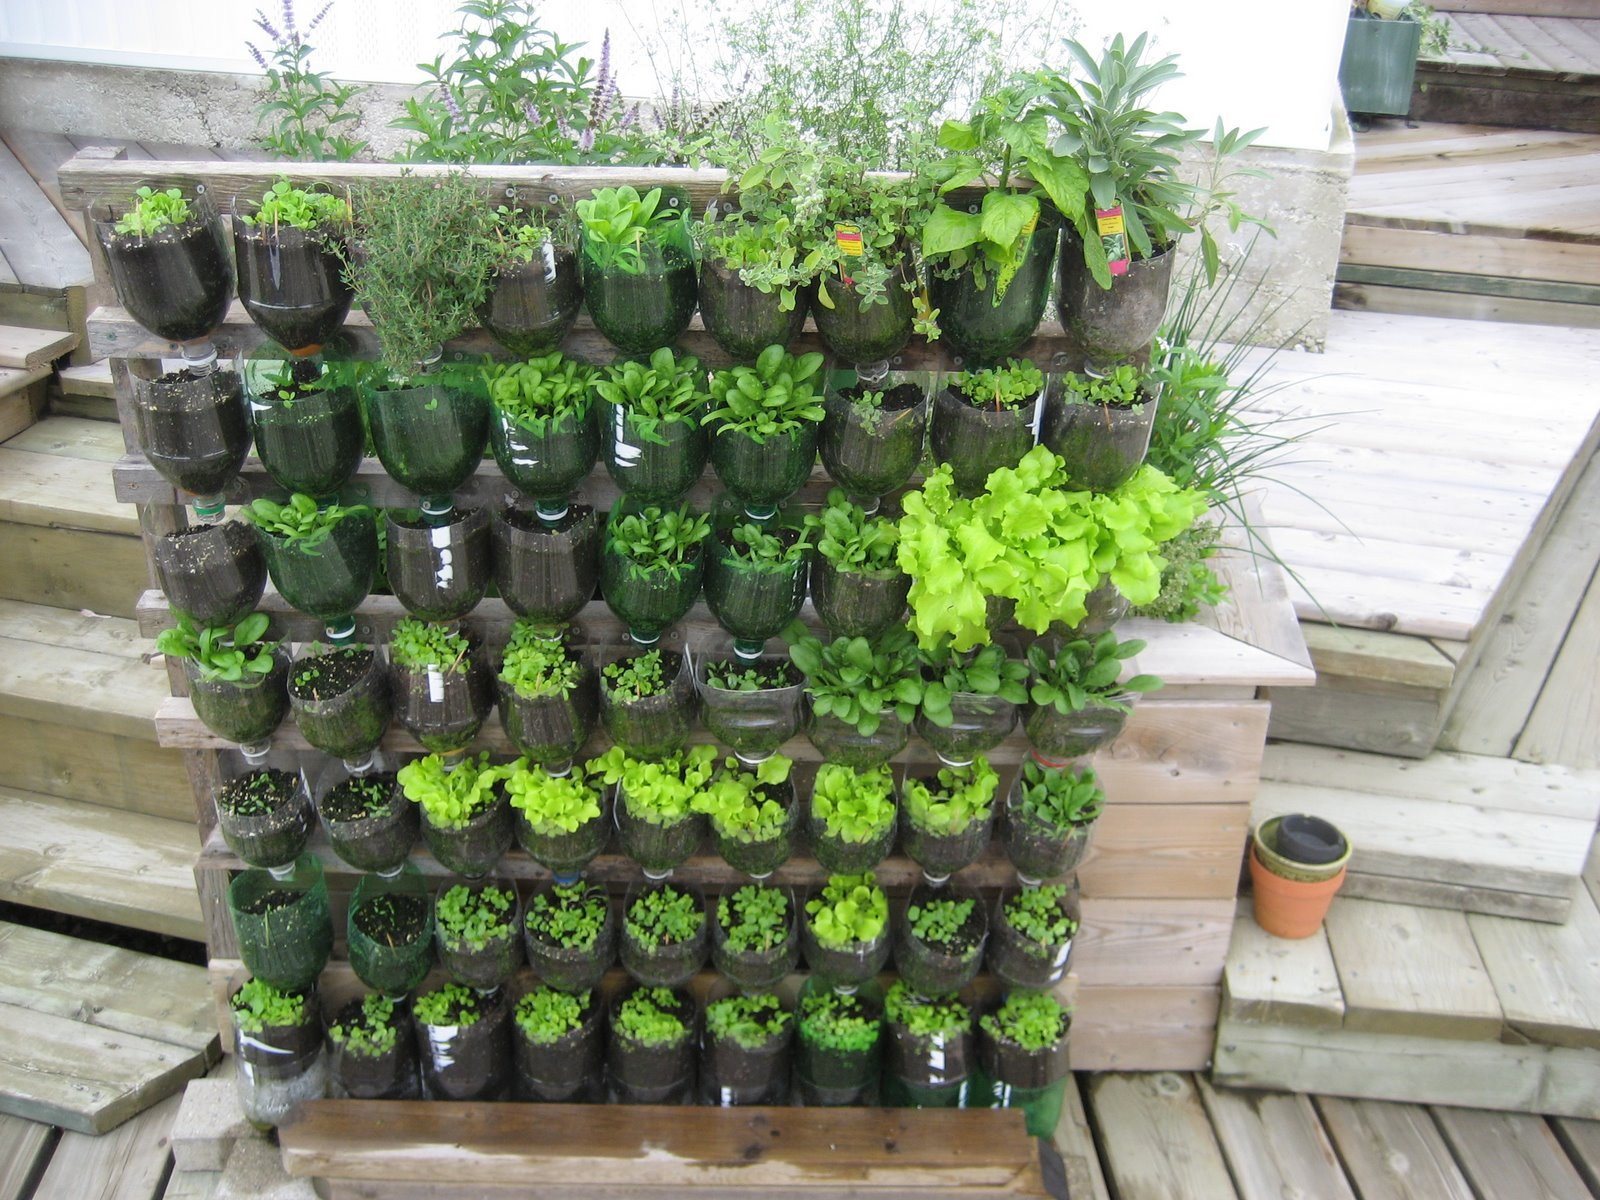 Best ideas about Vertical Vegetable Garden
. Save or Pin 20 Vertical Ve able Garden Ideas Now.